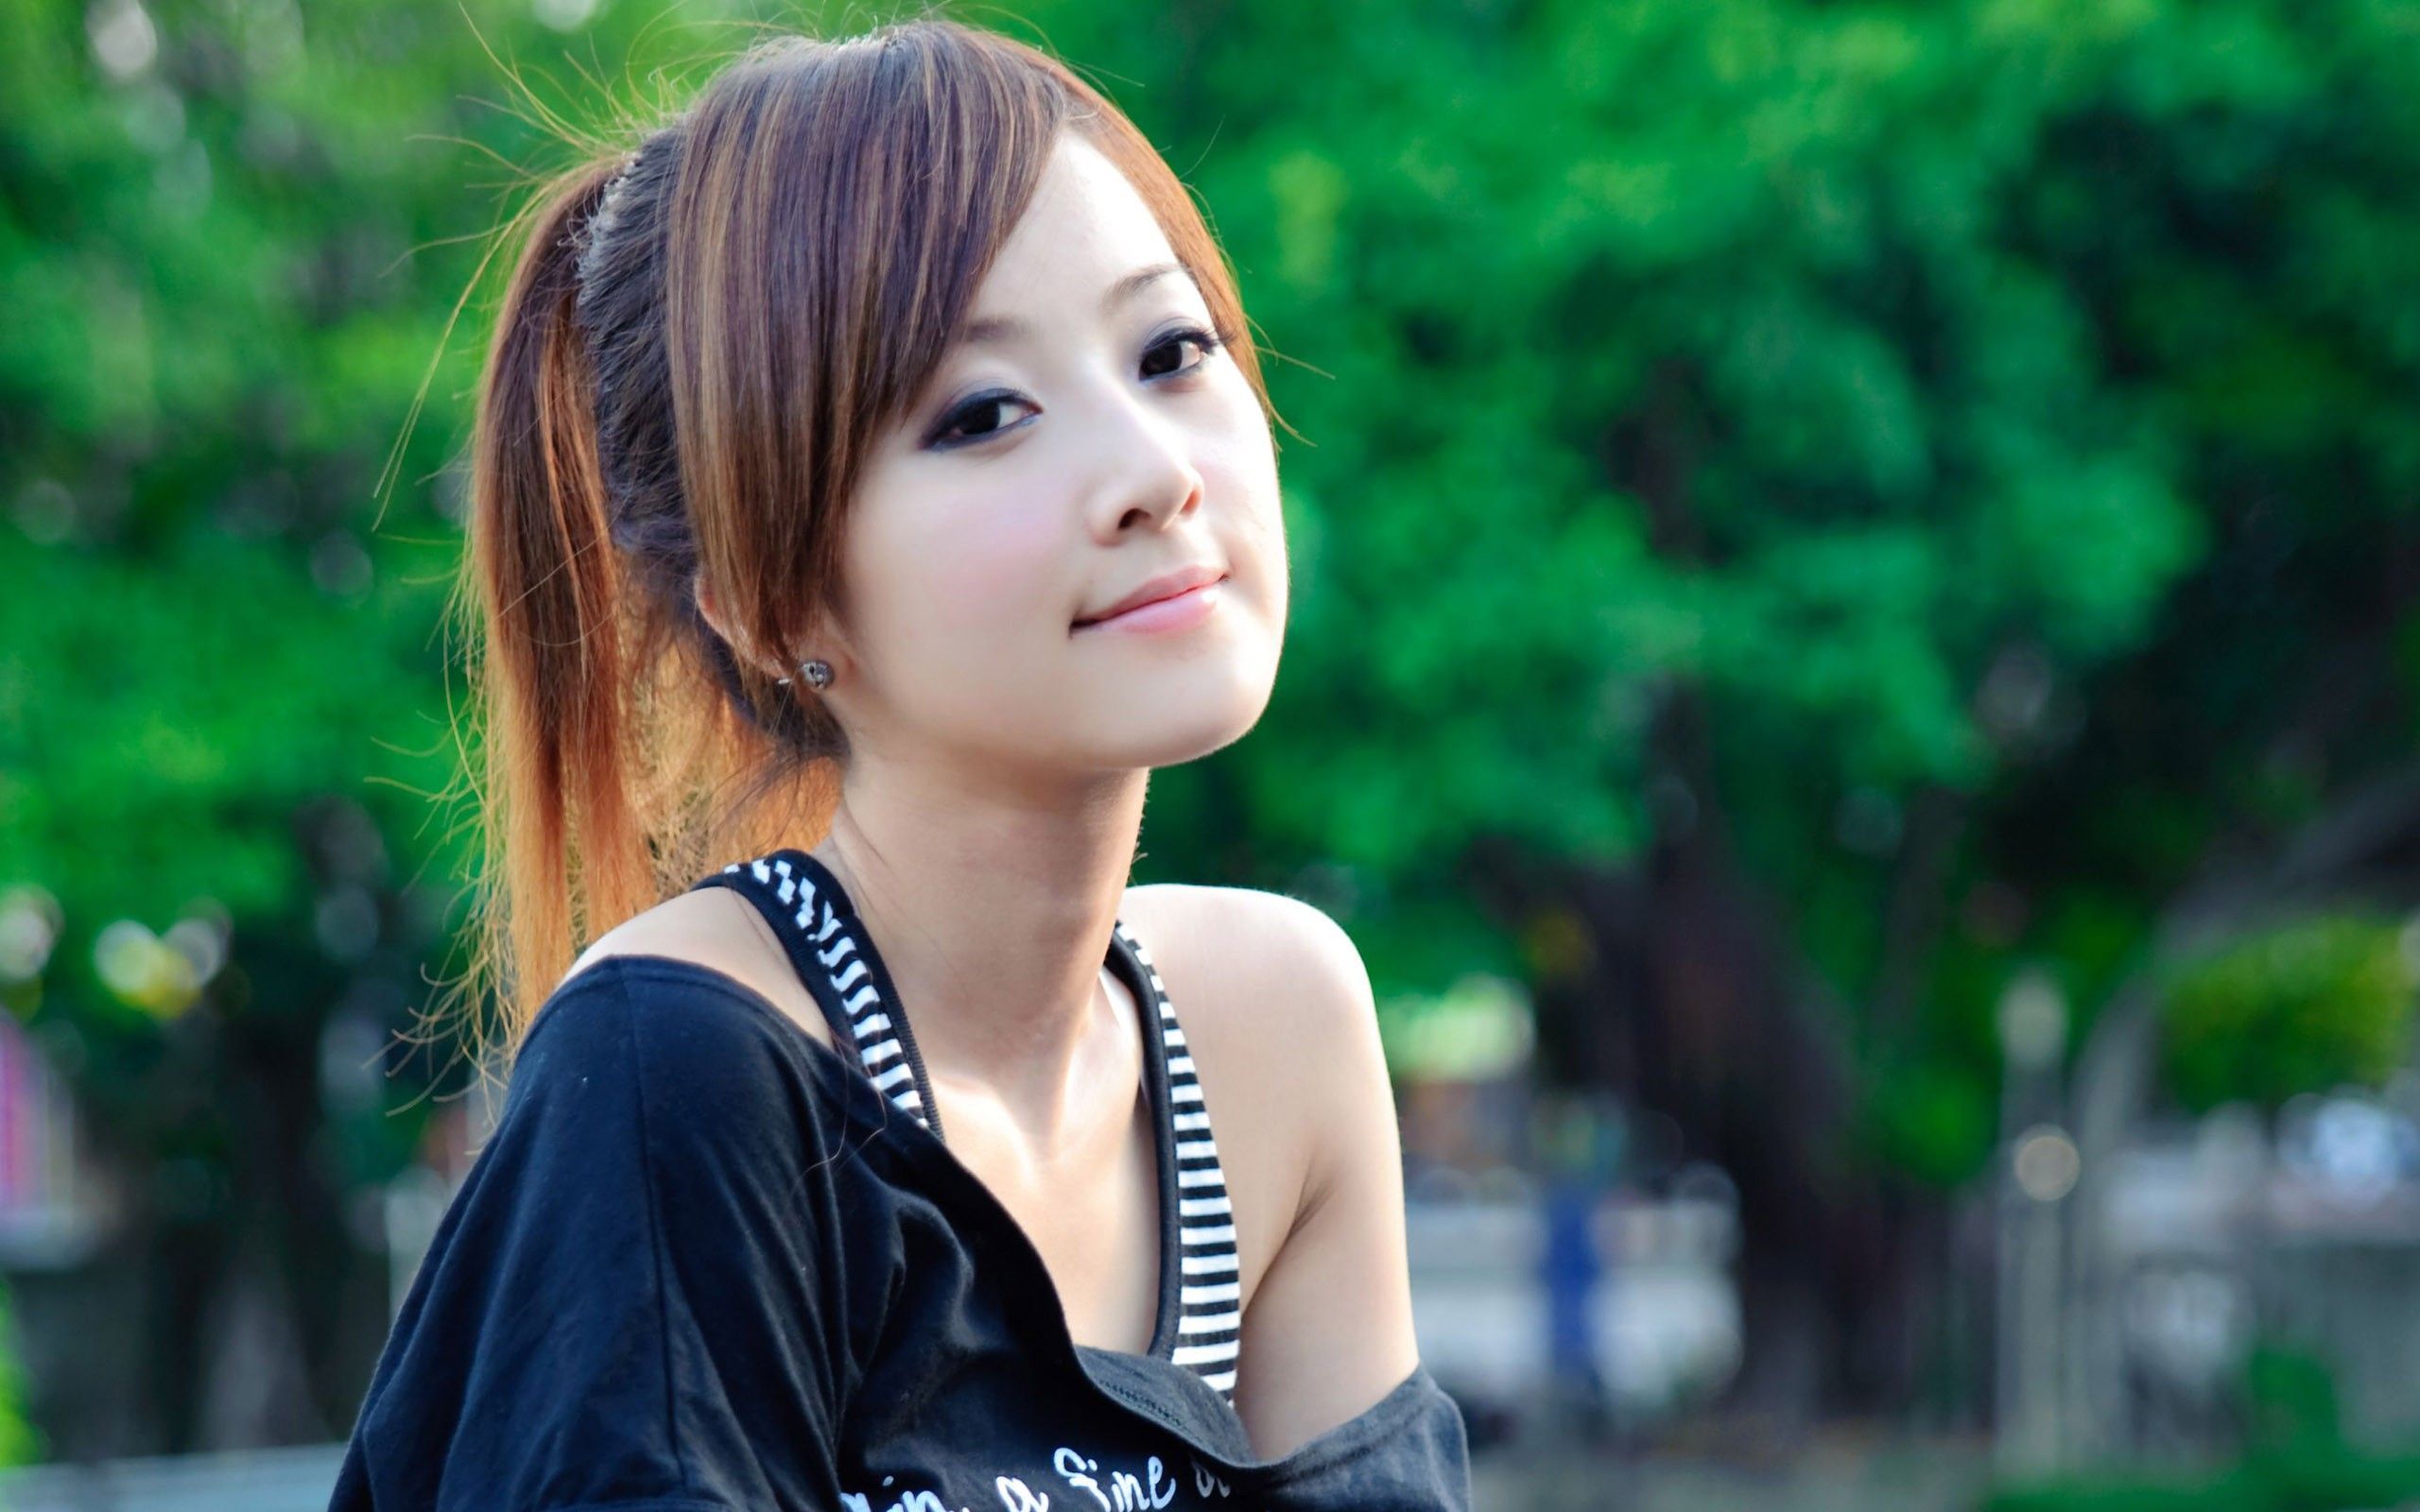 https://www.teahub.io/photos/full/56-566815_cute-asian-girl-face.jpg